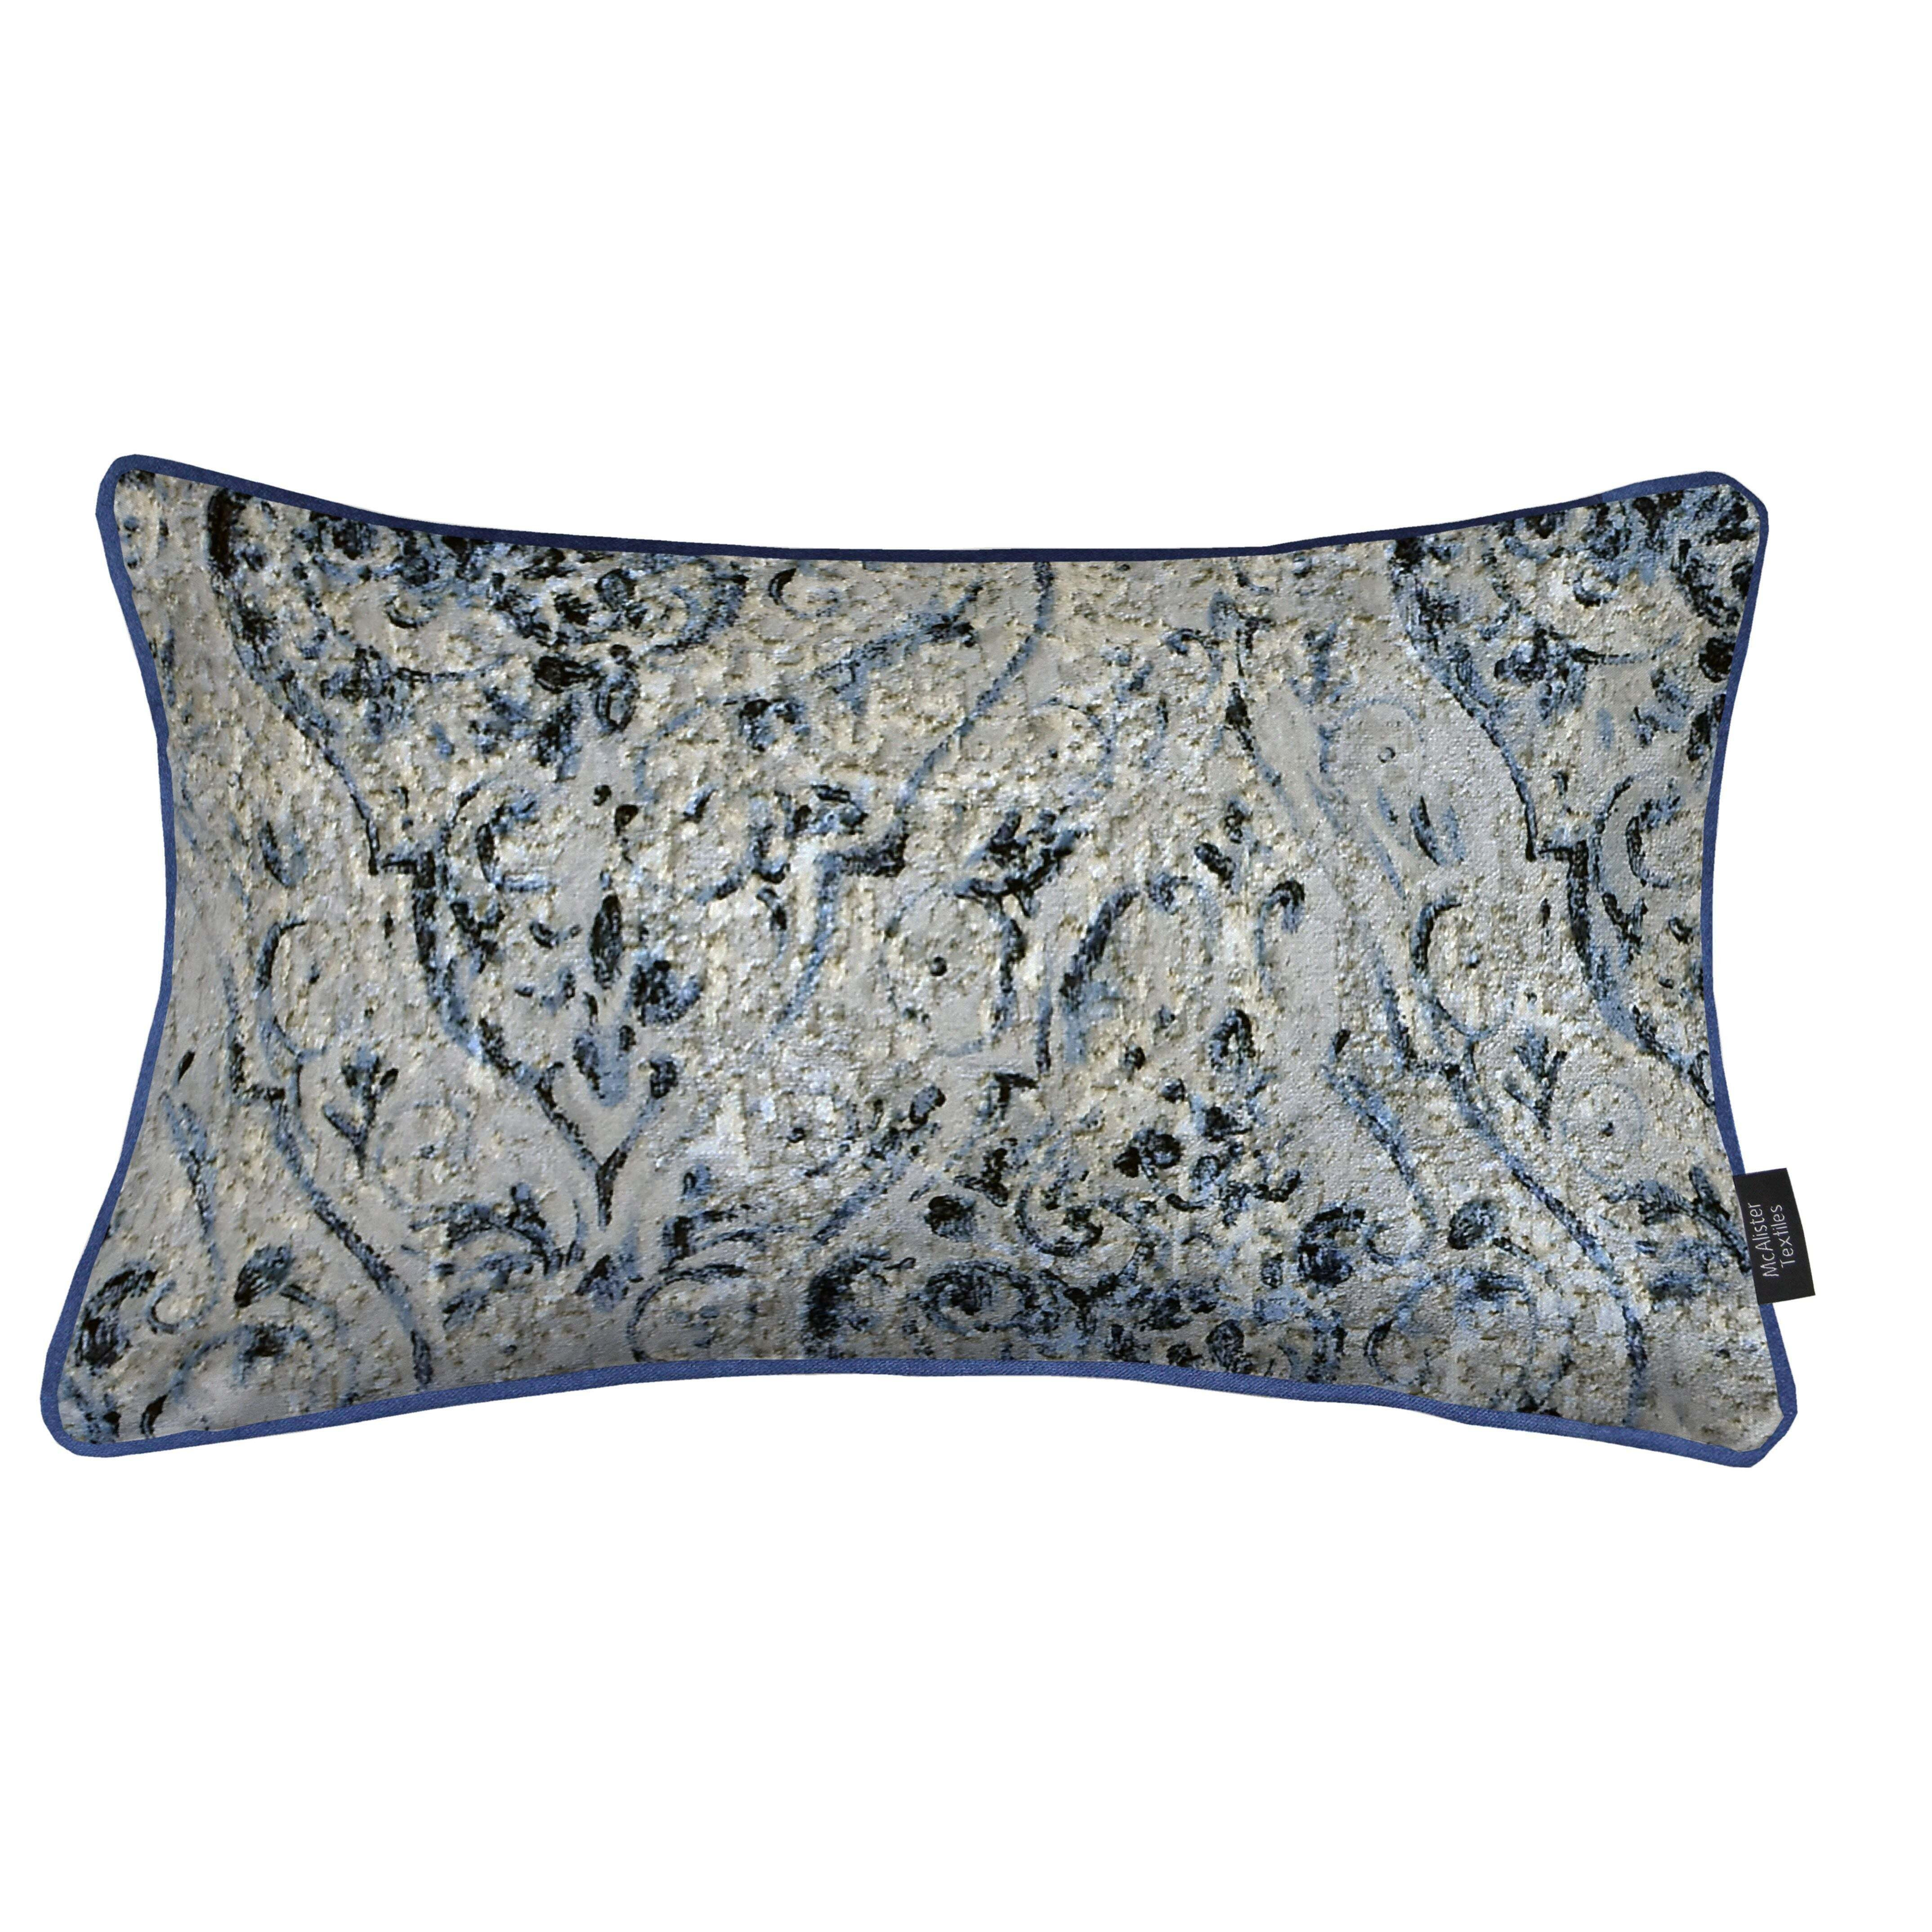 Renaissance Navy Blue Printed Velvet Cushions, Cover Only / 50cm x 30cm